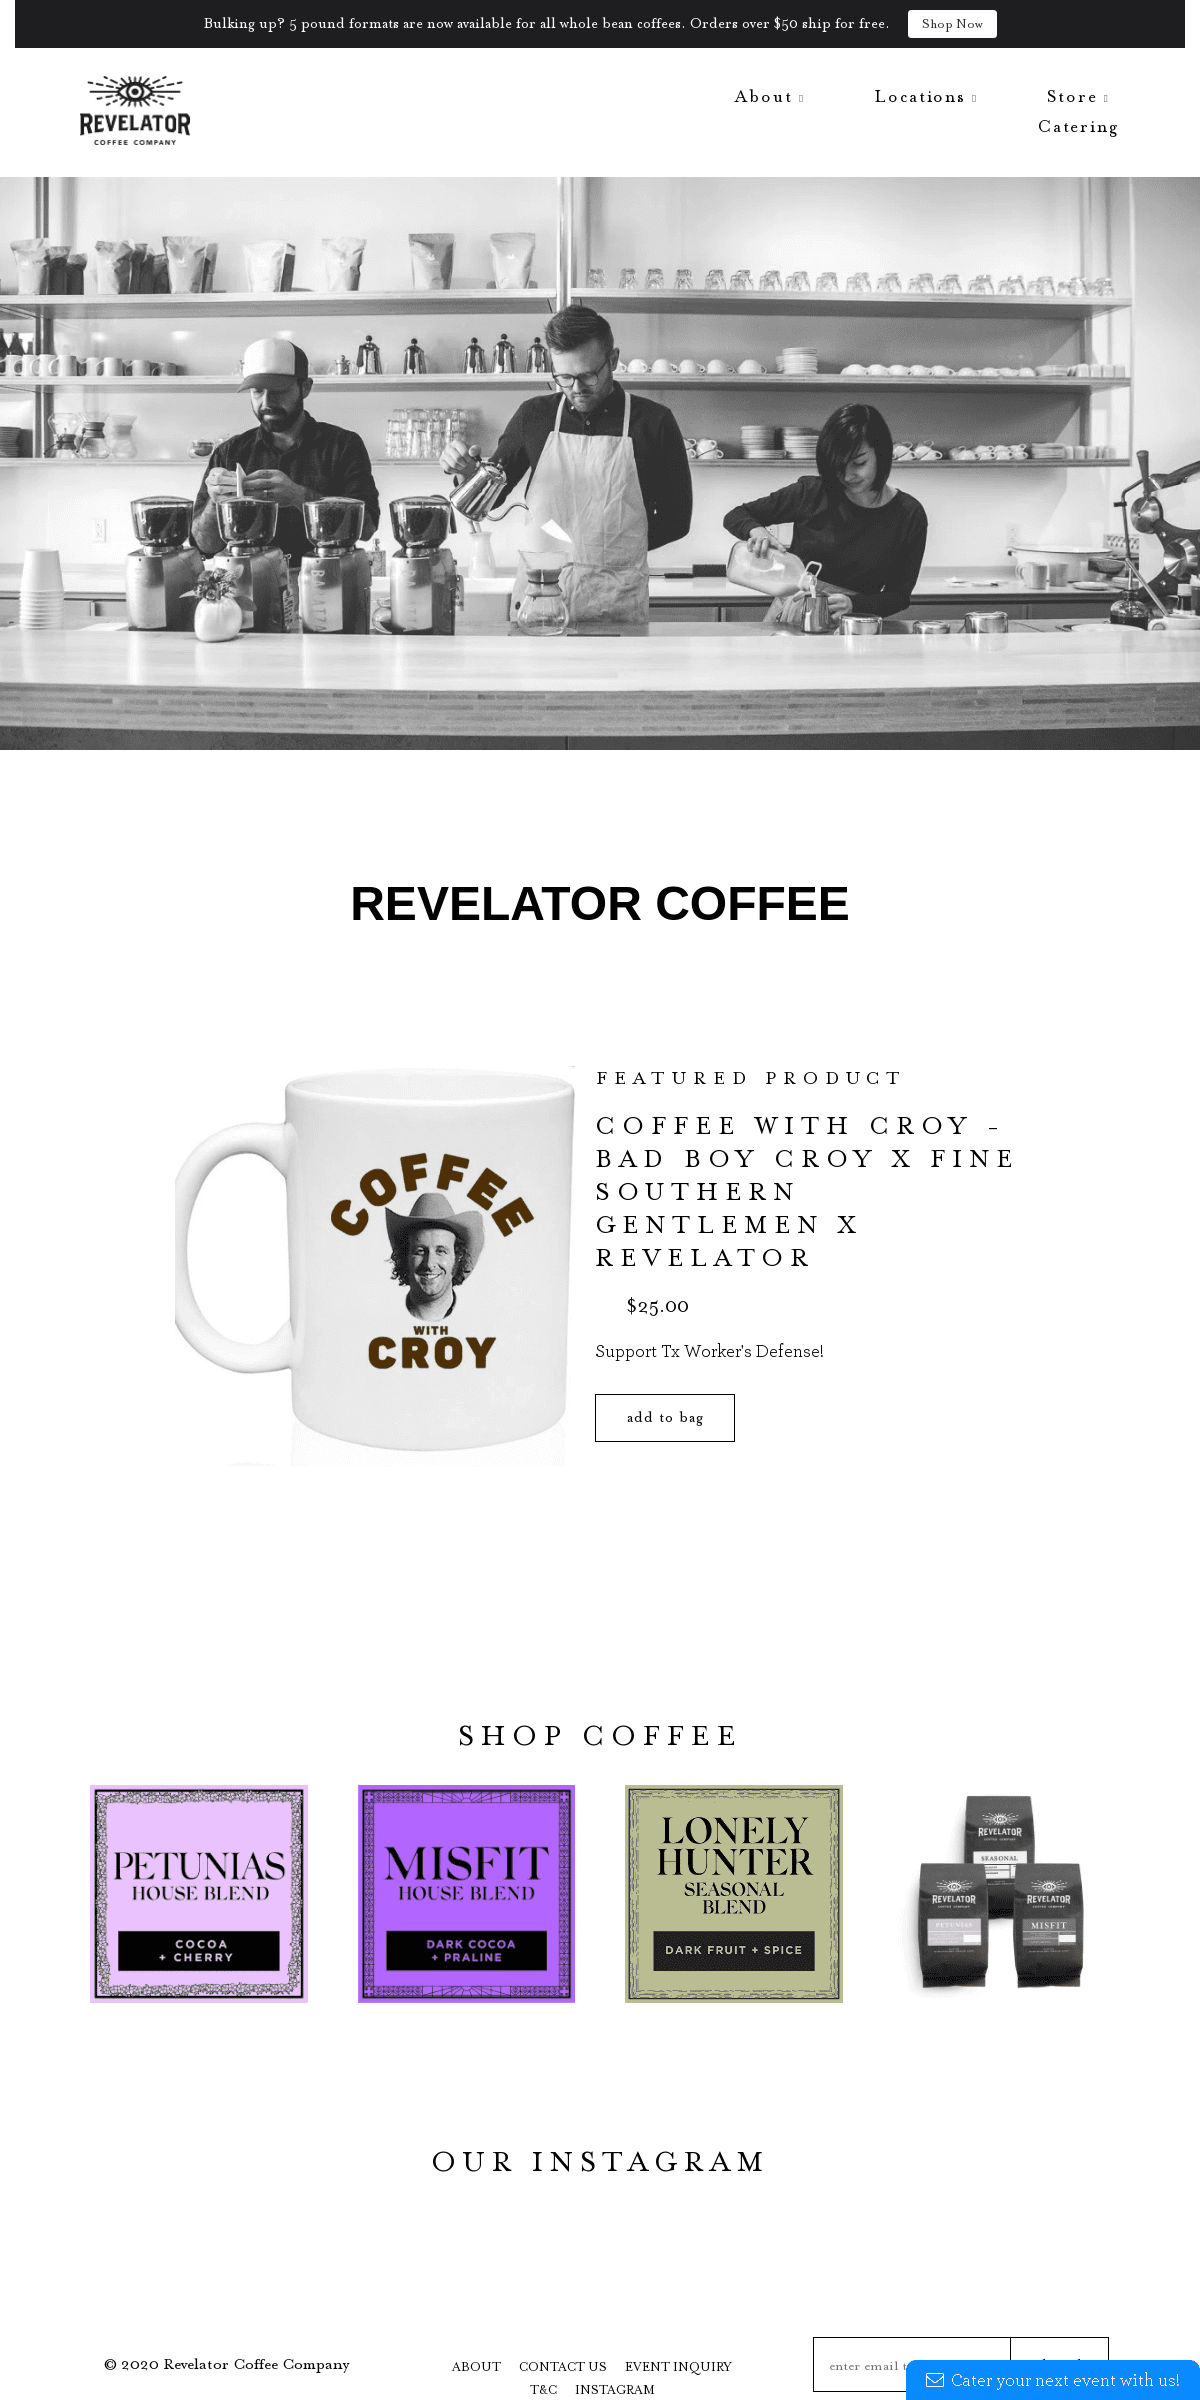 A complete backup of revelatorcoffee.com